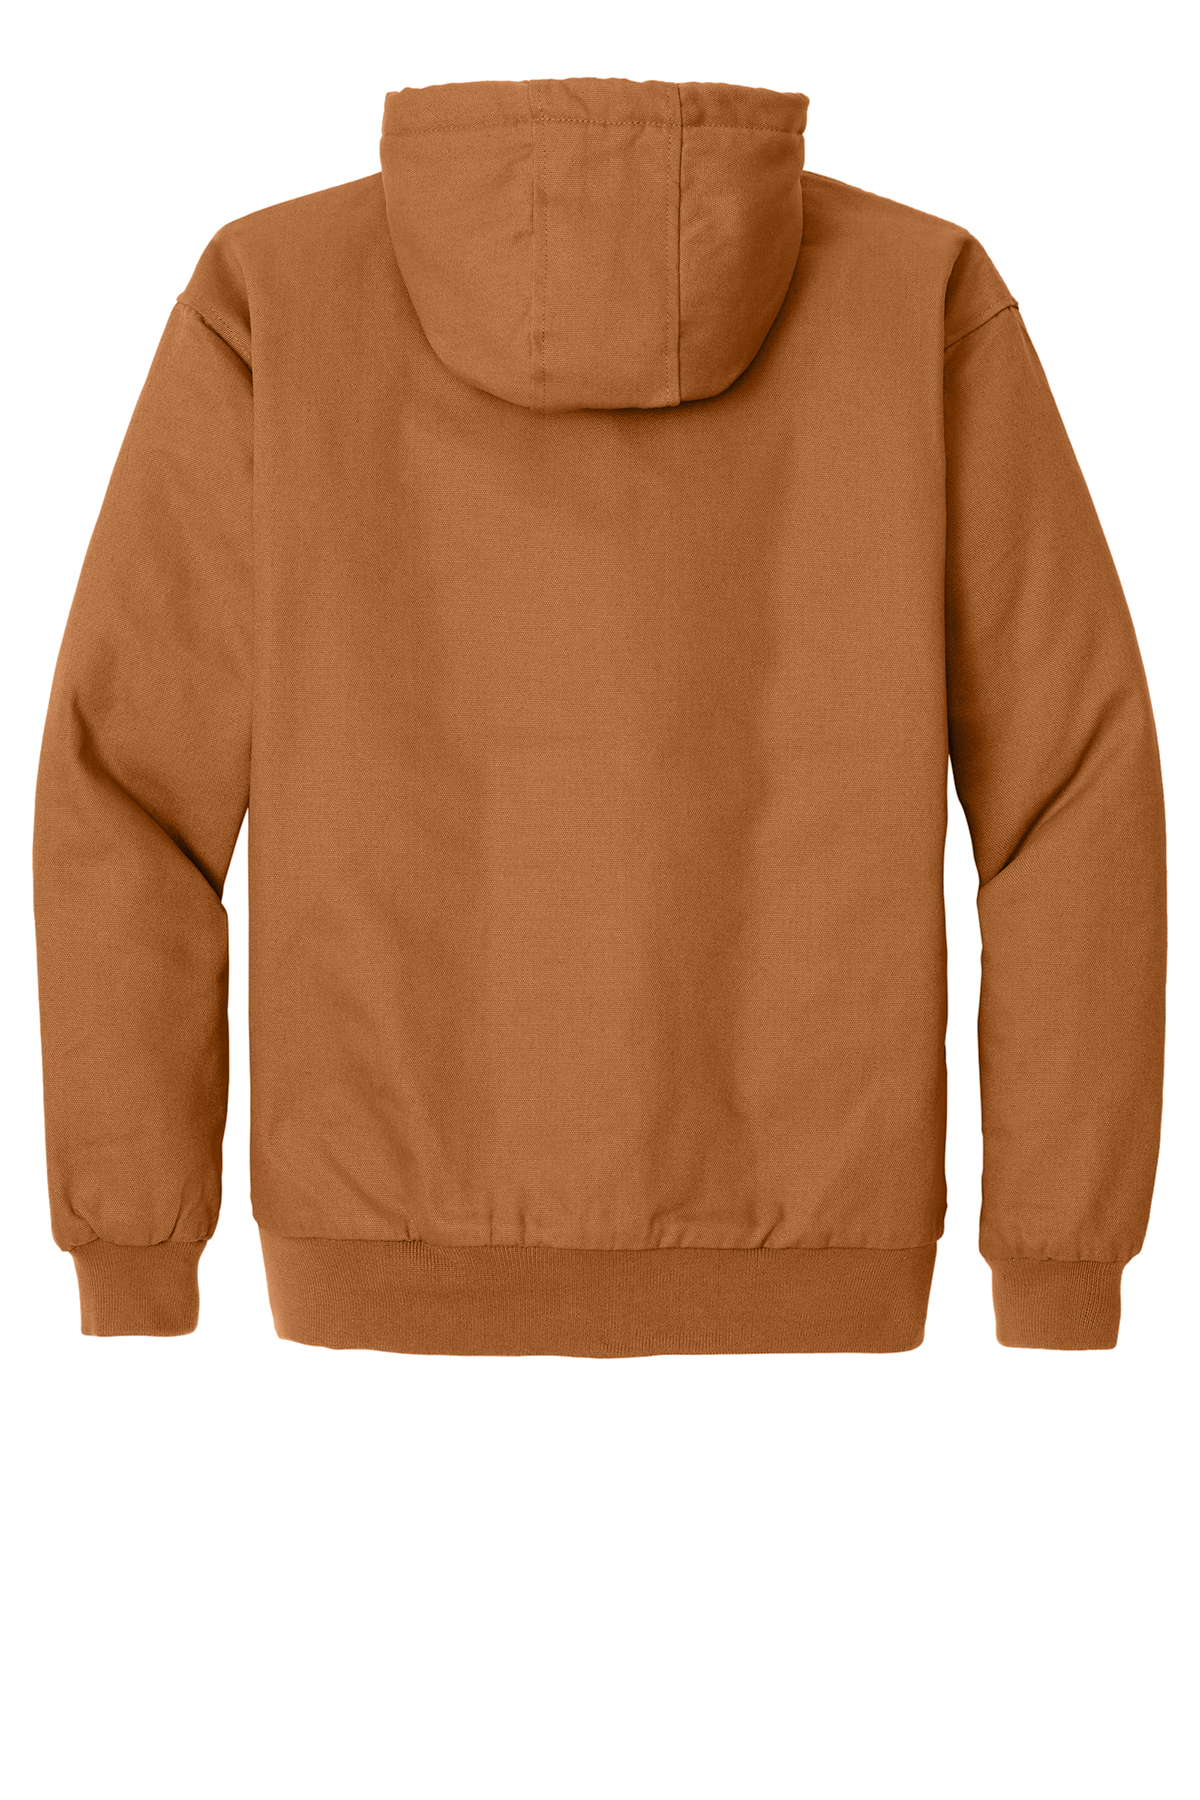 CornerStone Tall Duck Cloth Hooded Work Jacket | Product | CornerStone